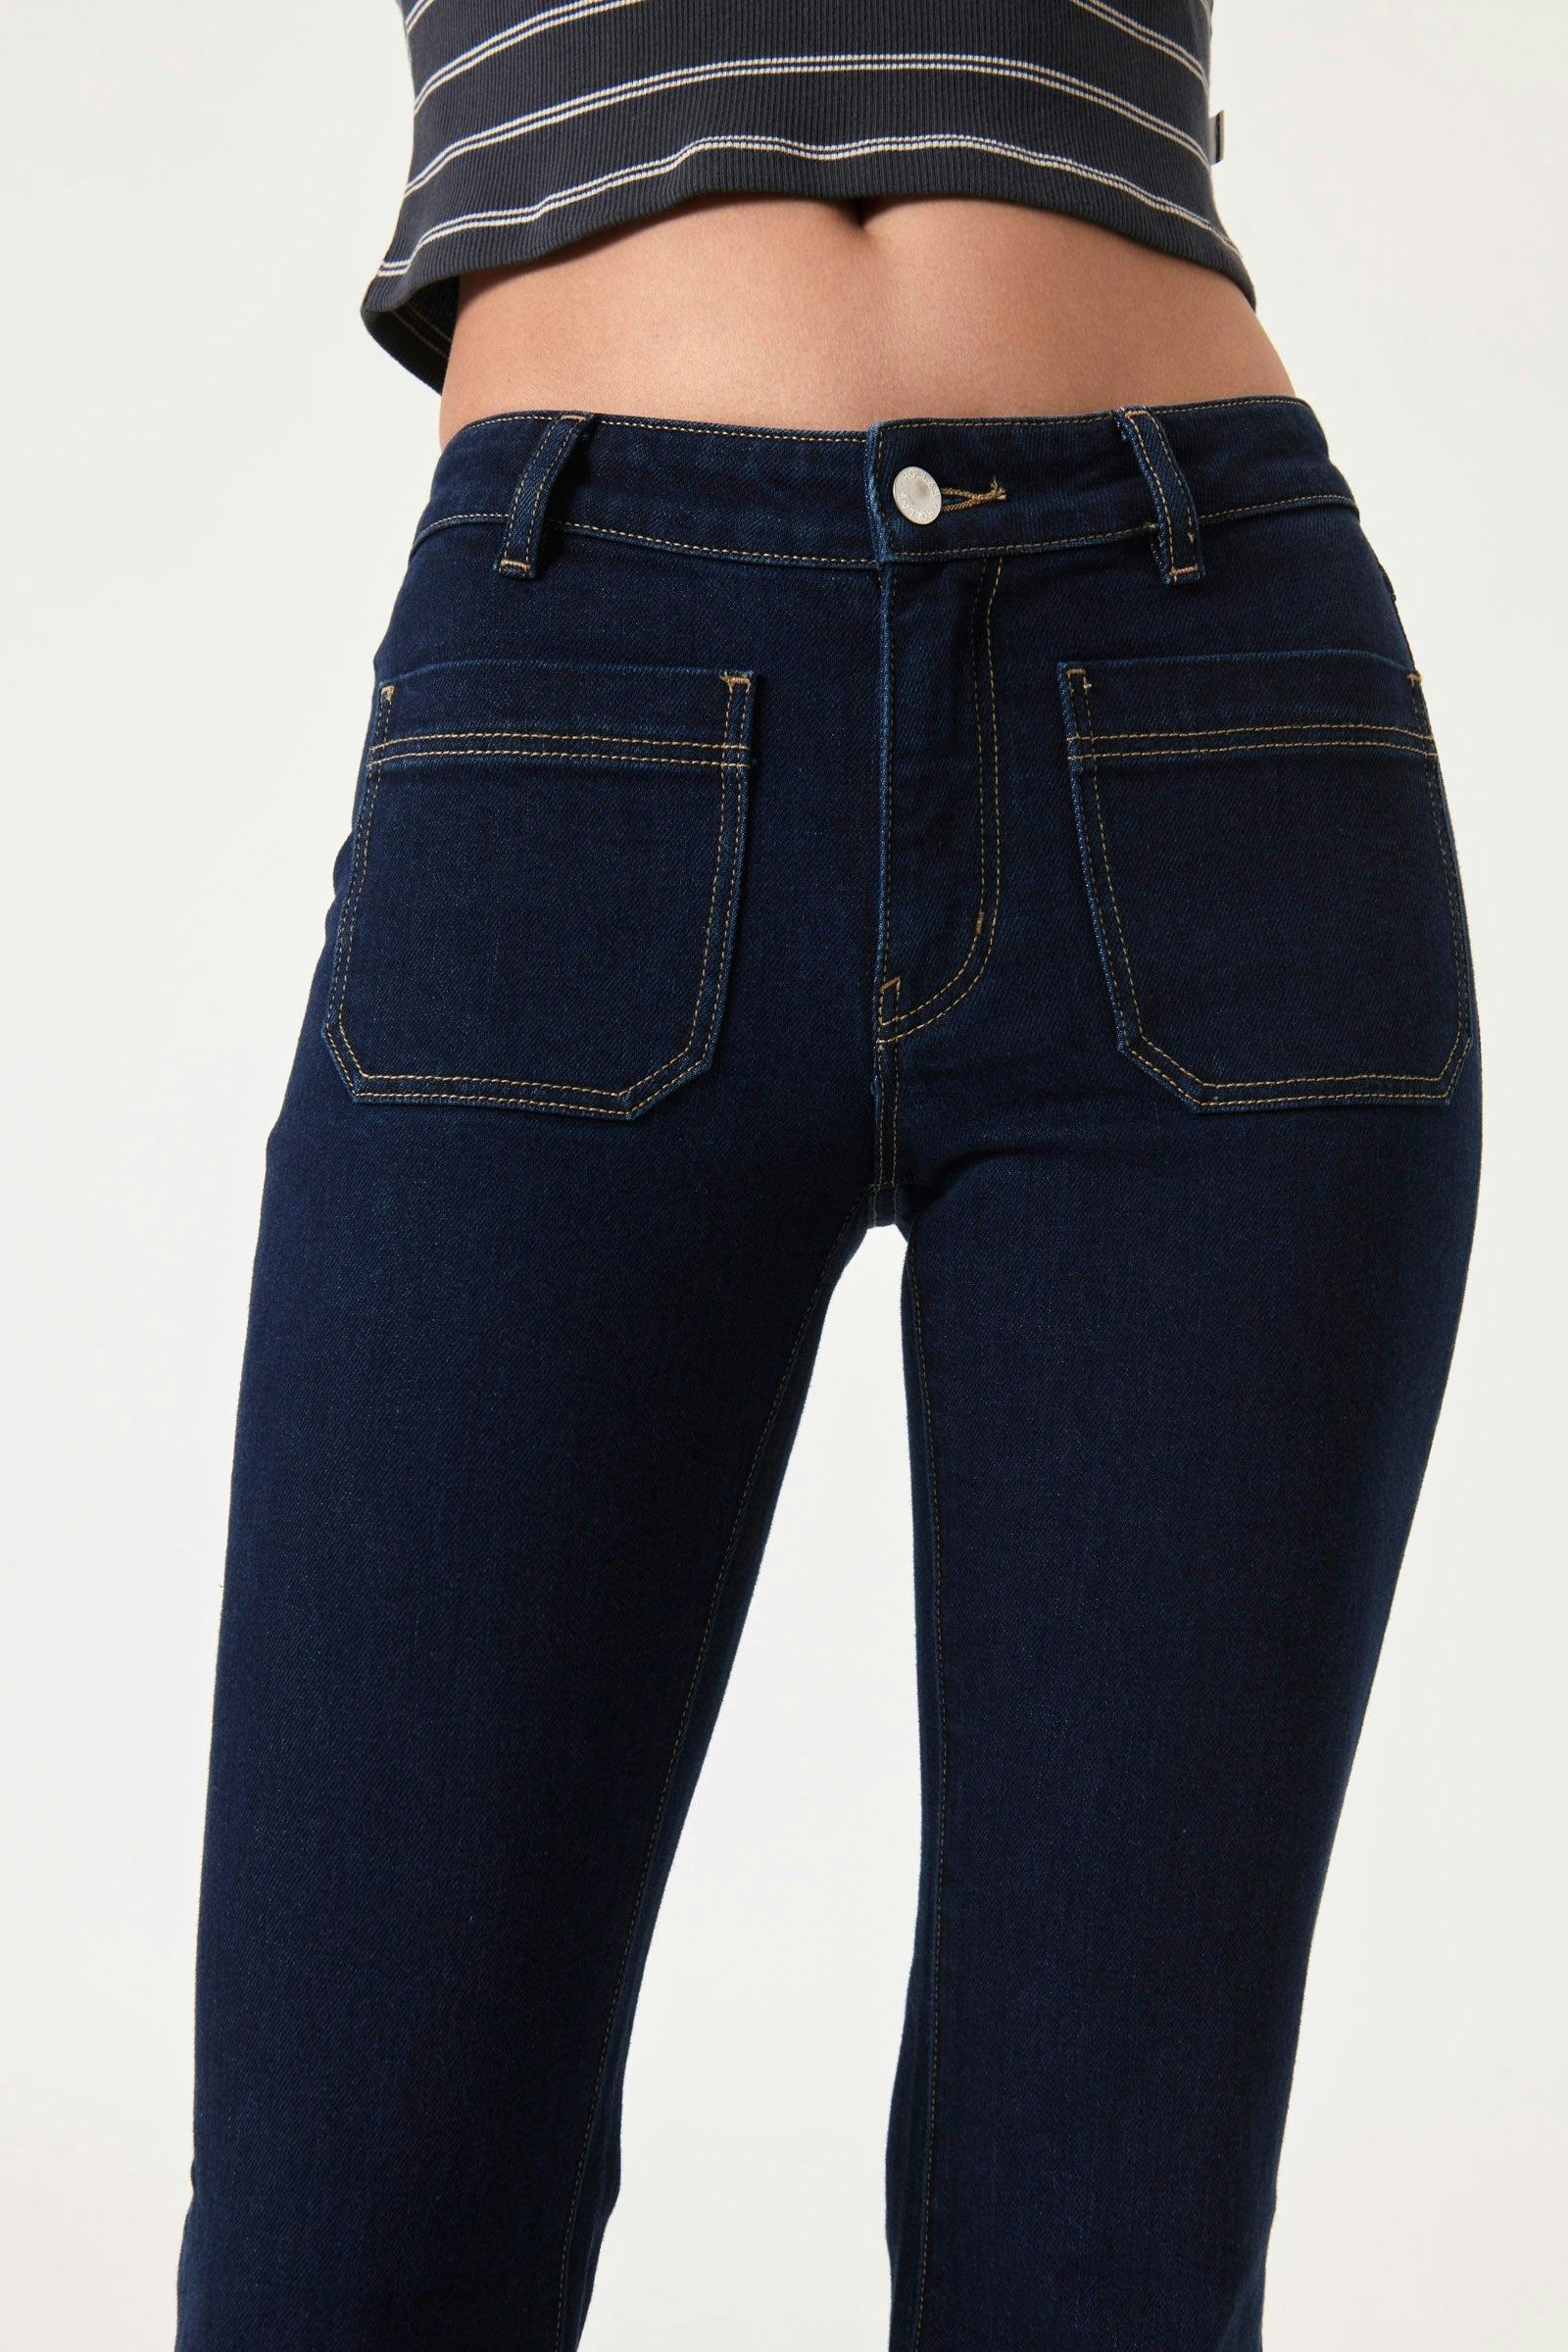 Buy Eastcoast Low Flare - Alina Blue Online | Rollas Jeans